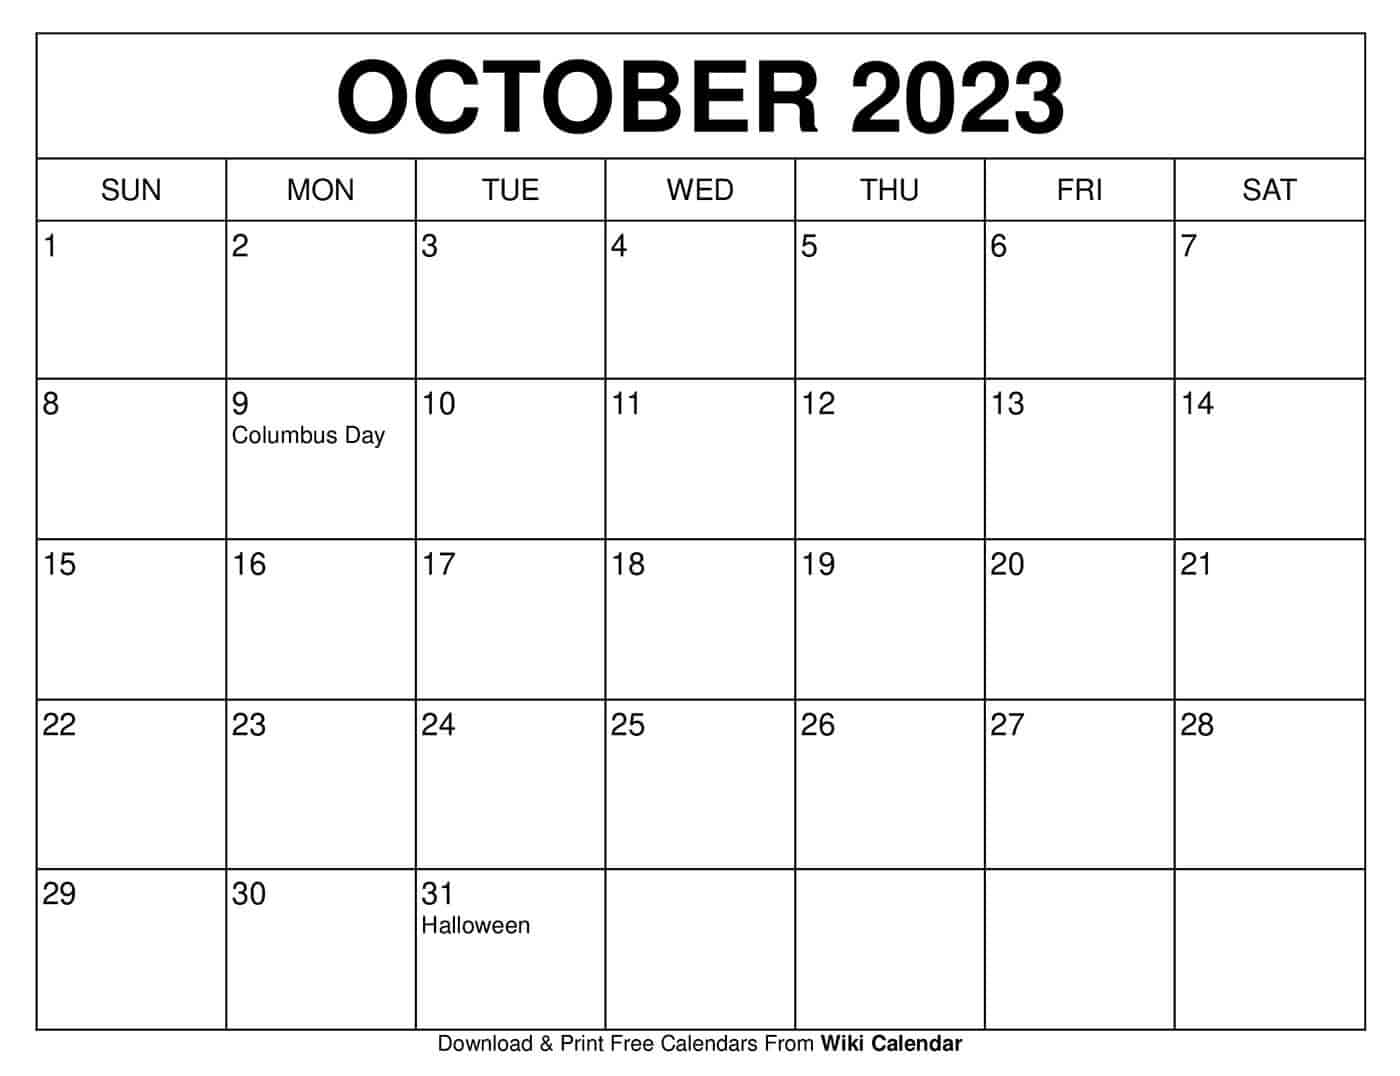 Free Printable October 2023 Calendar Templates With Holidays Wiki Calendar